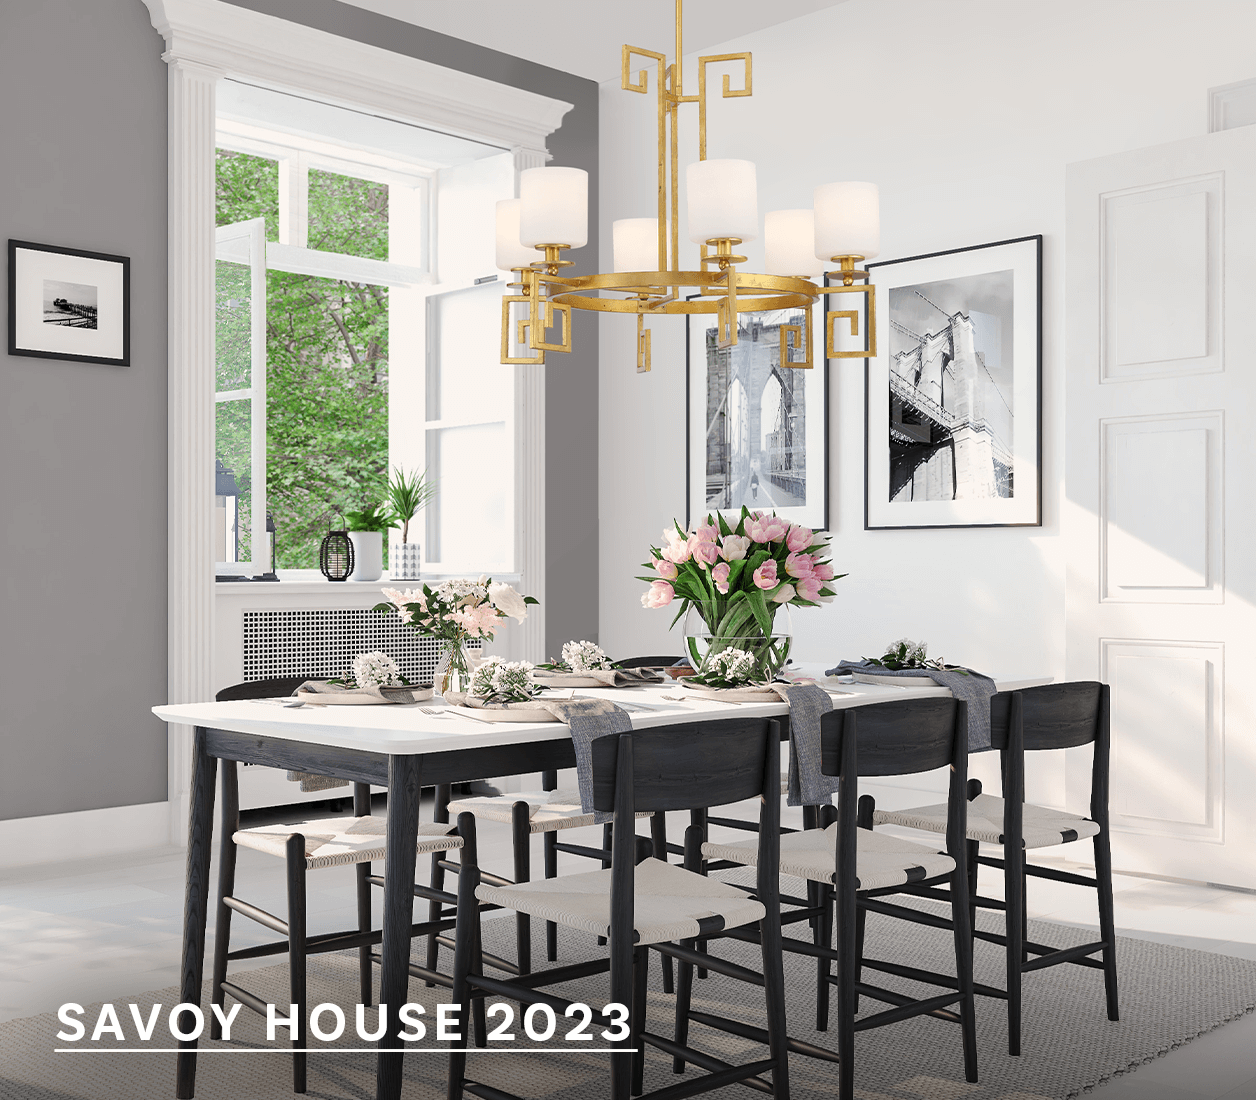 Savoy House 2023